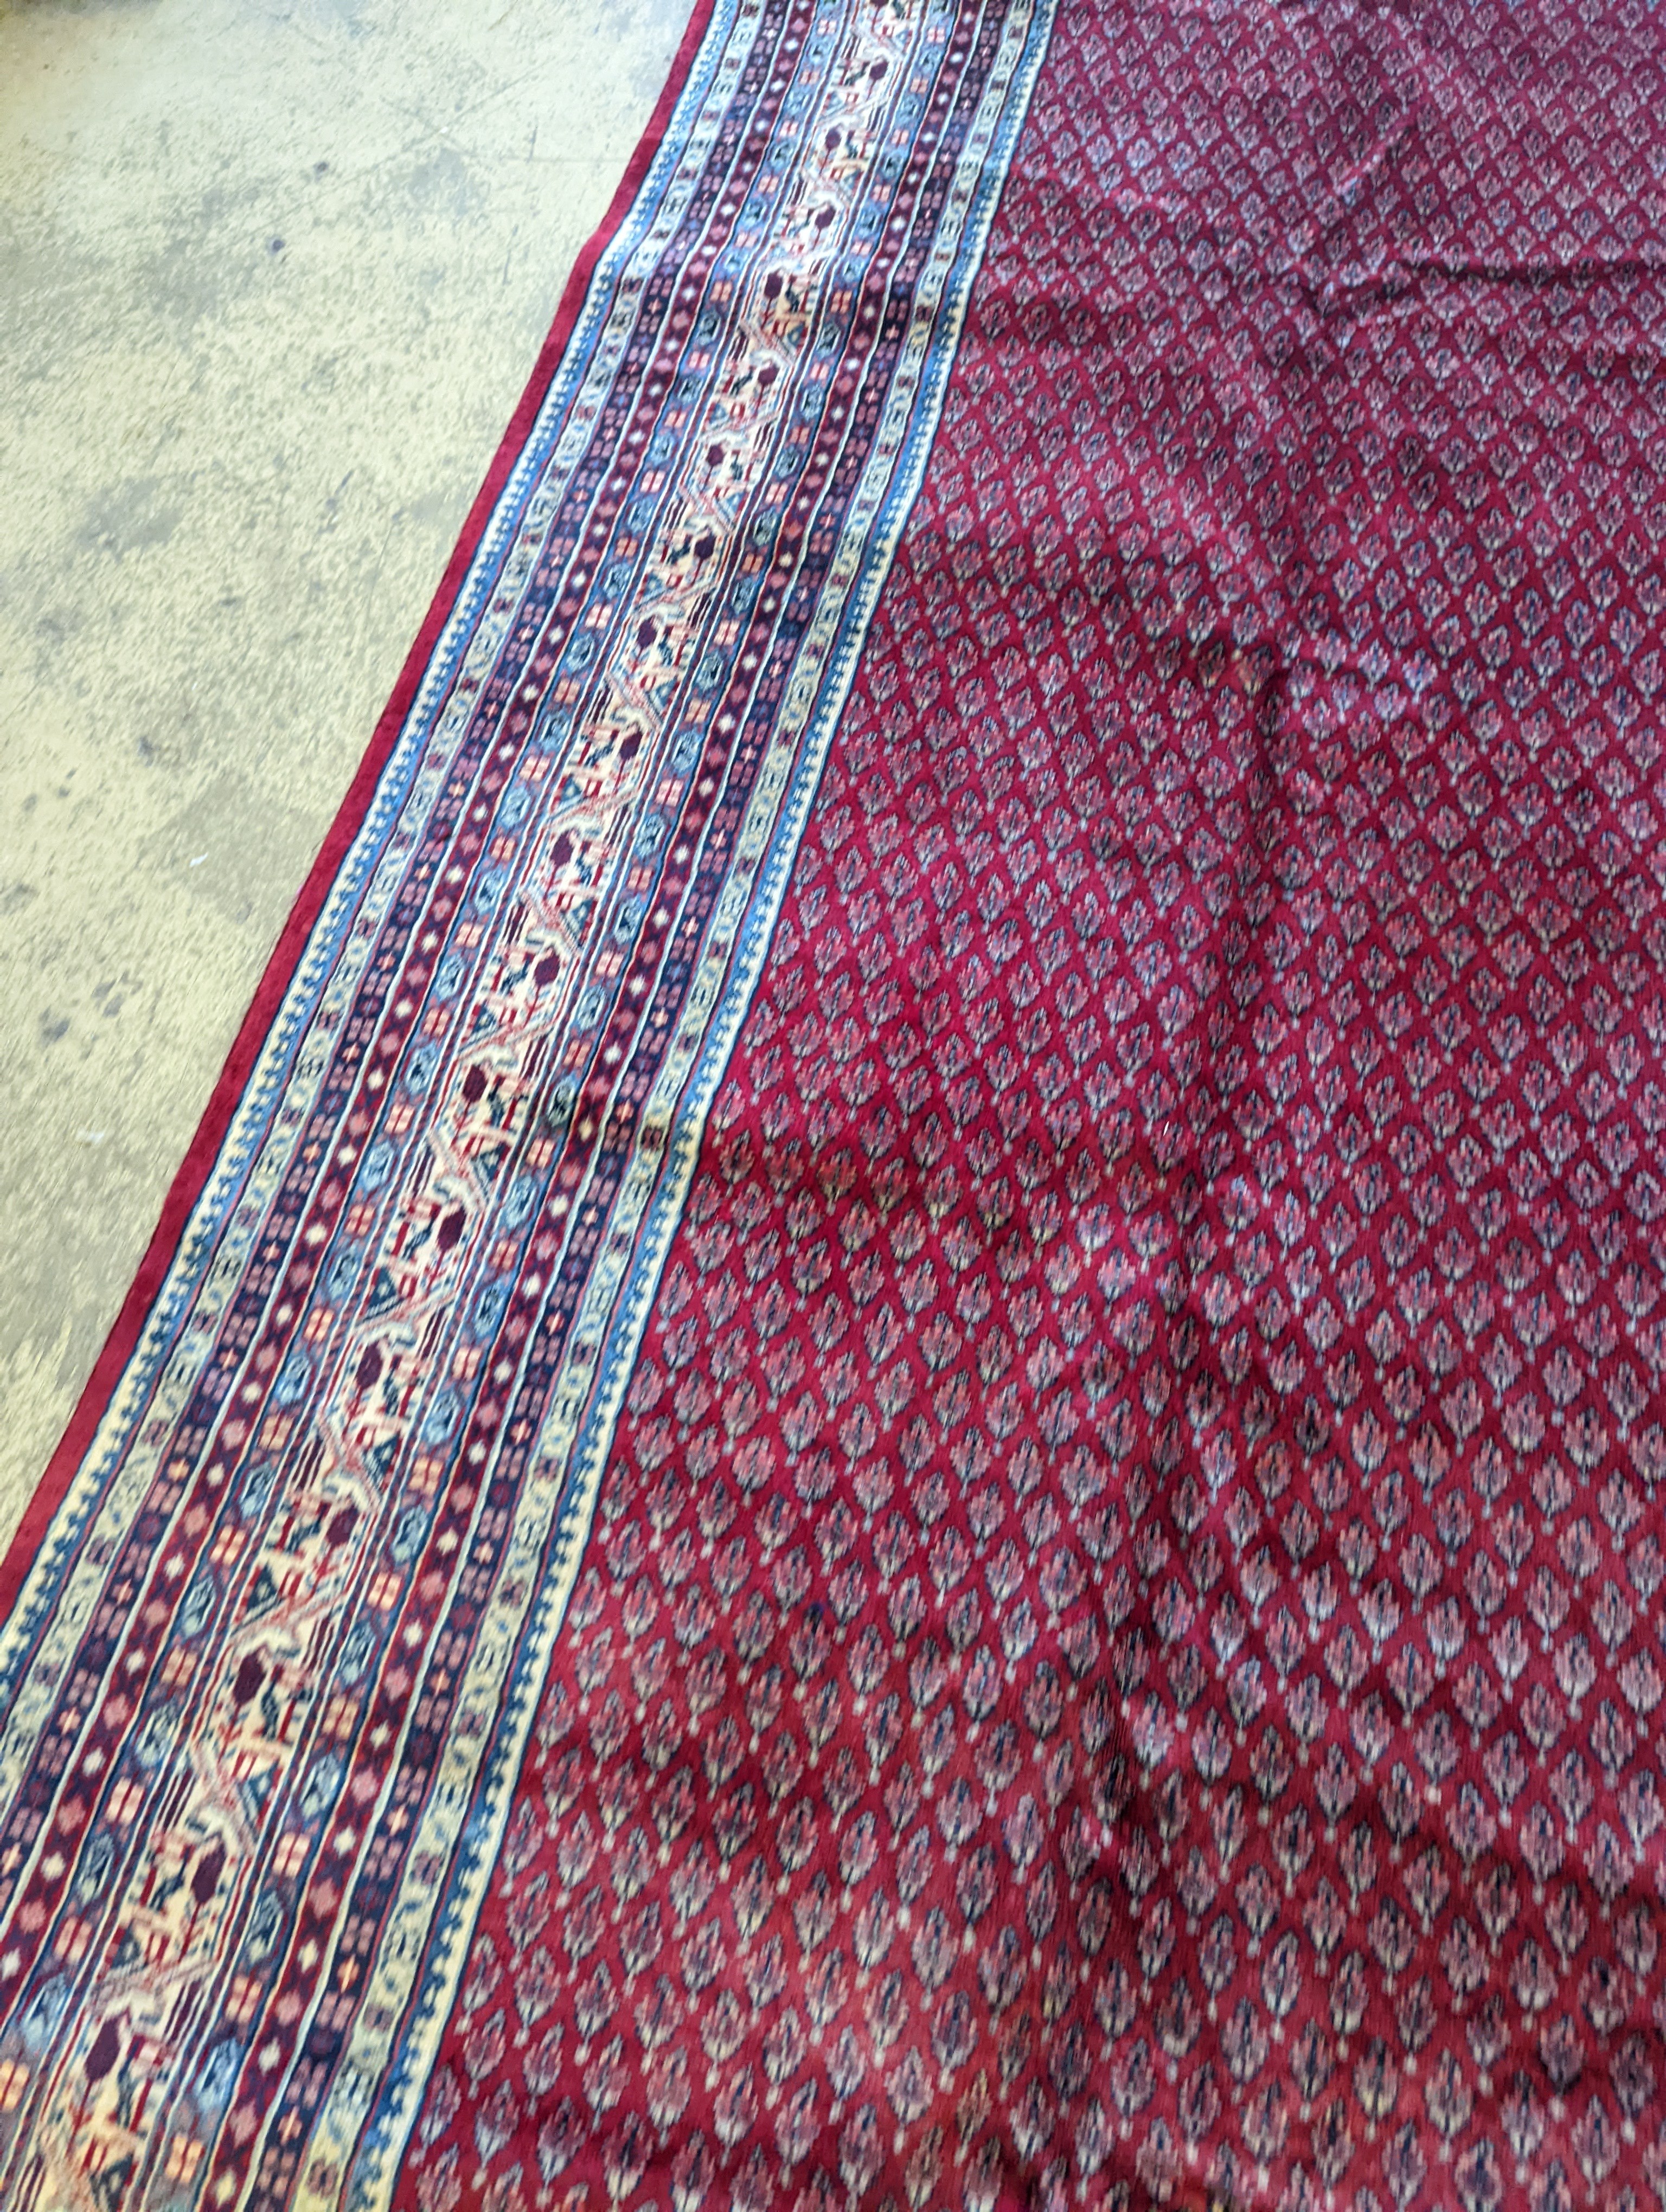 An Araak carpet, 350 x 250cm